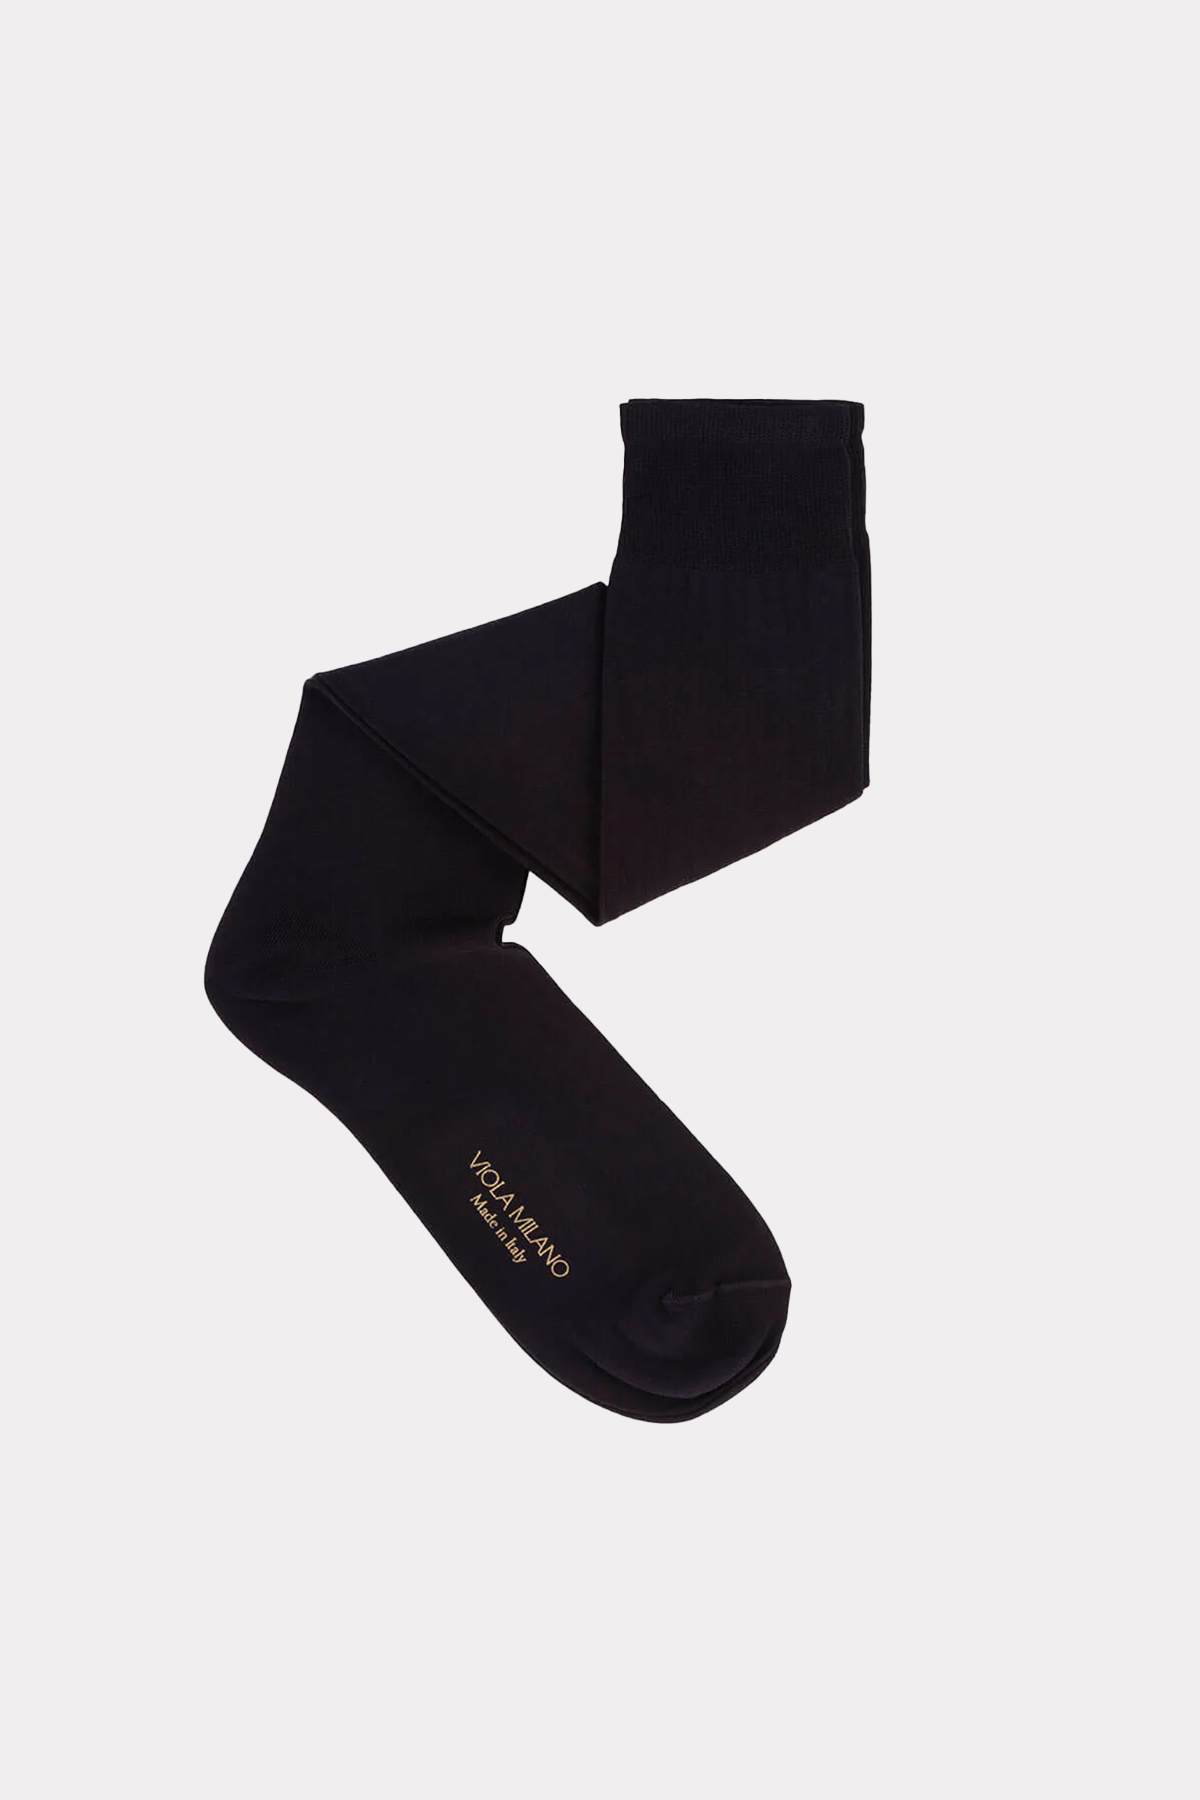 Socken in schwarz